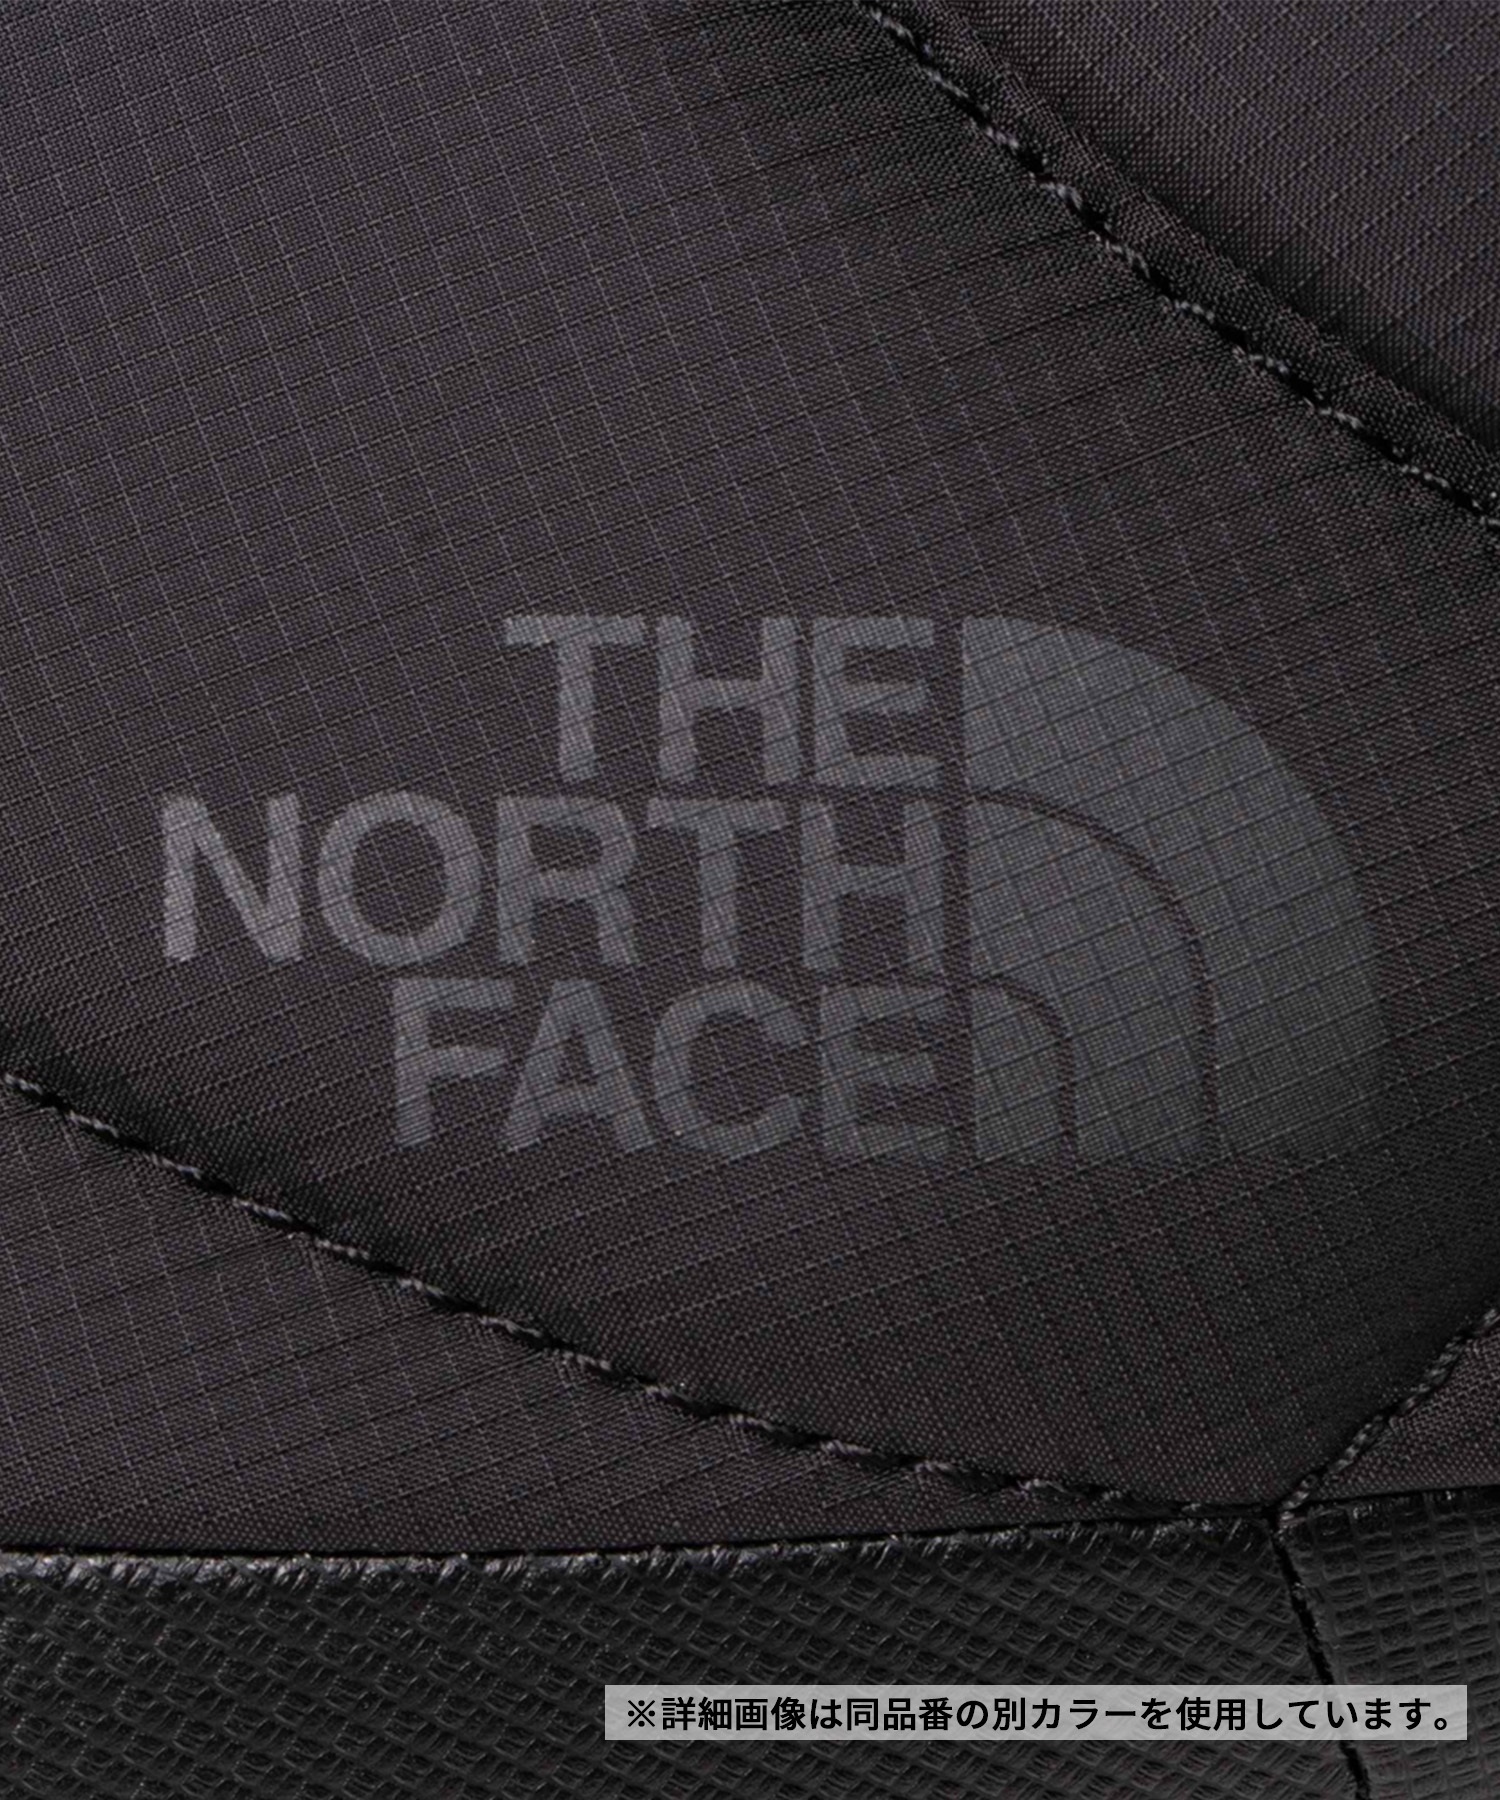 THE NORTH FACE/ザ・ノース・フェイス Nuptse Bootie WP VII ヌプシ ブーティー ウォータープルーフ 7 メンズ ブーツ 防水 防寒 軽量 NF52272 FK(FK-23.0cm)